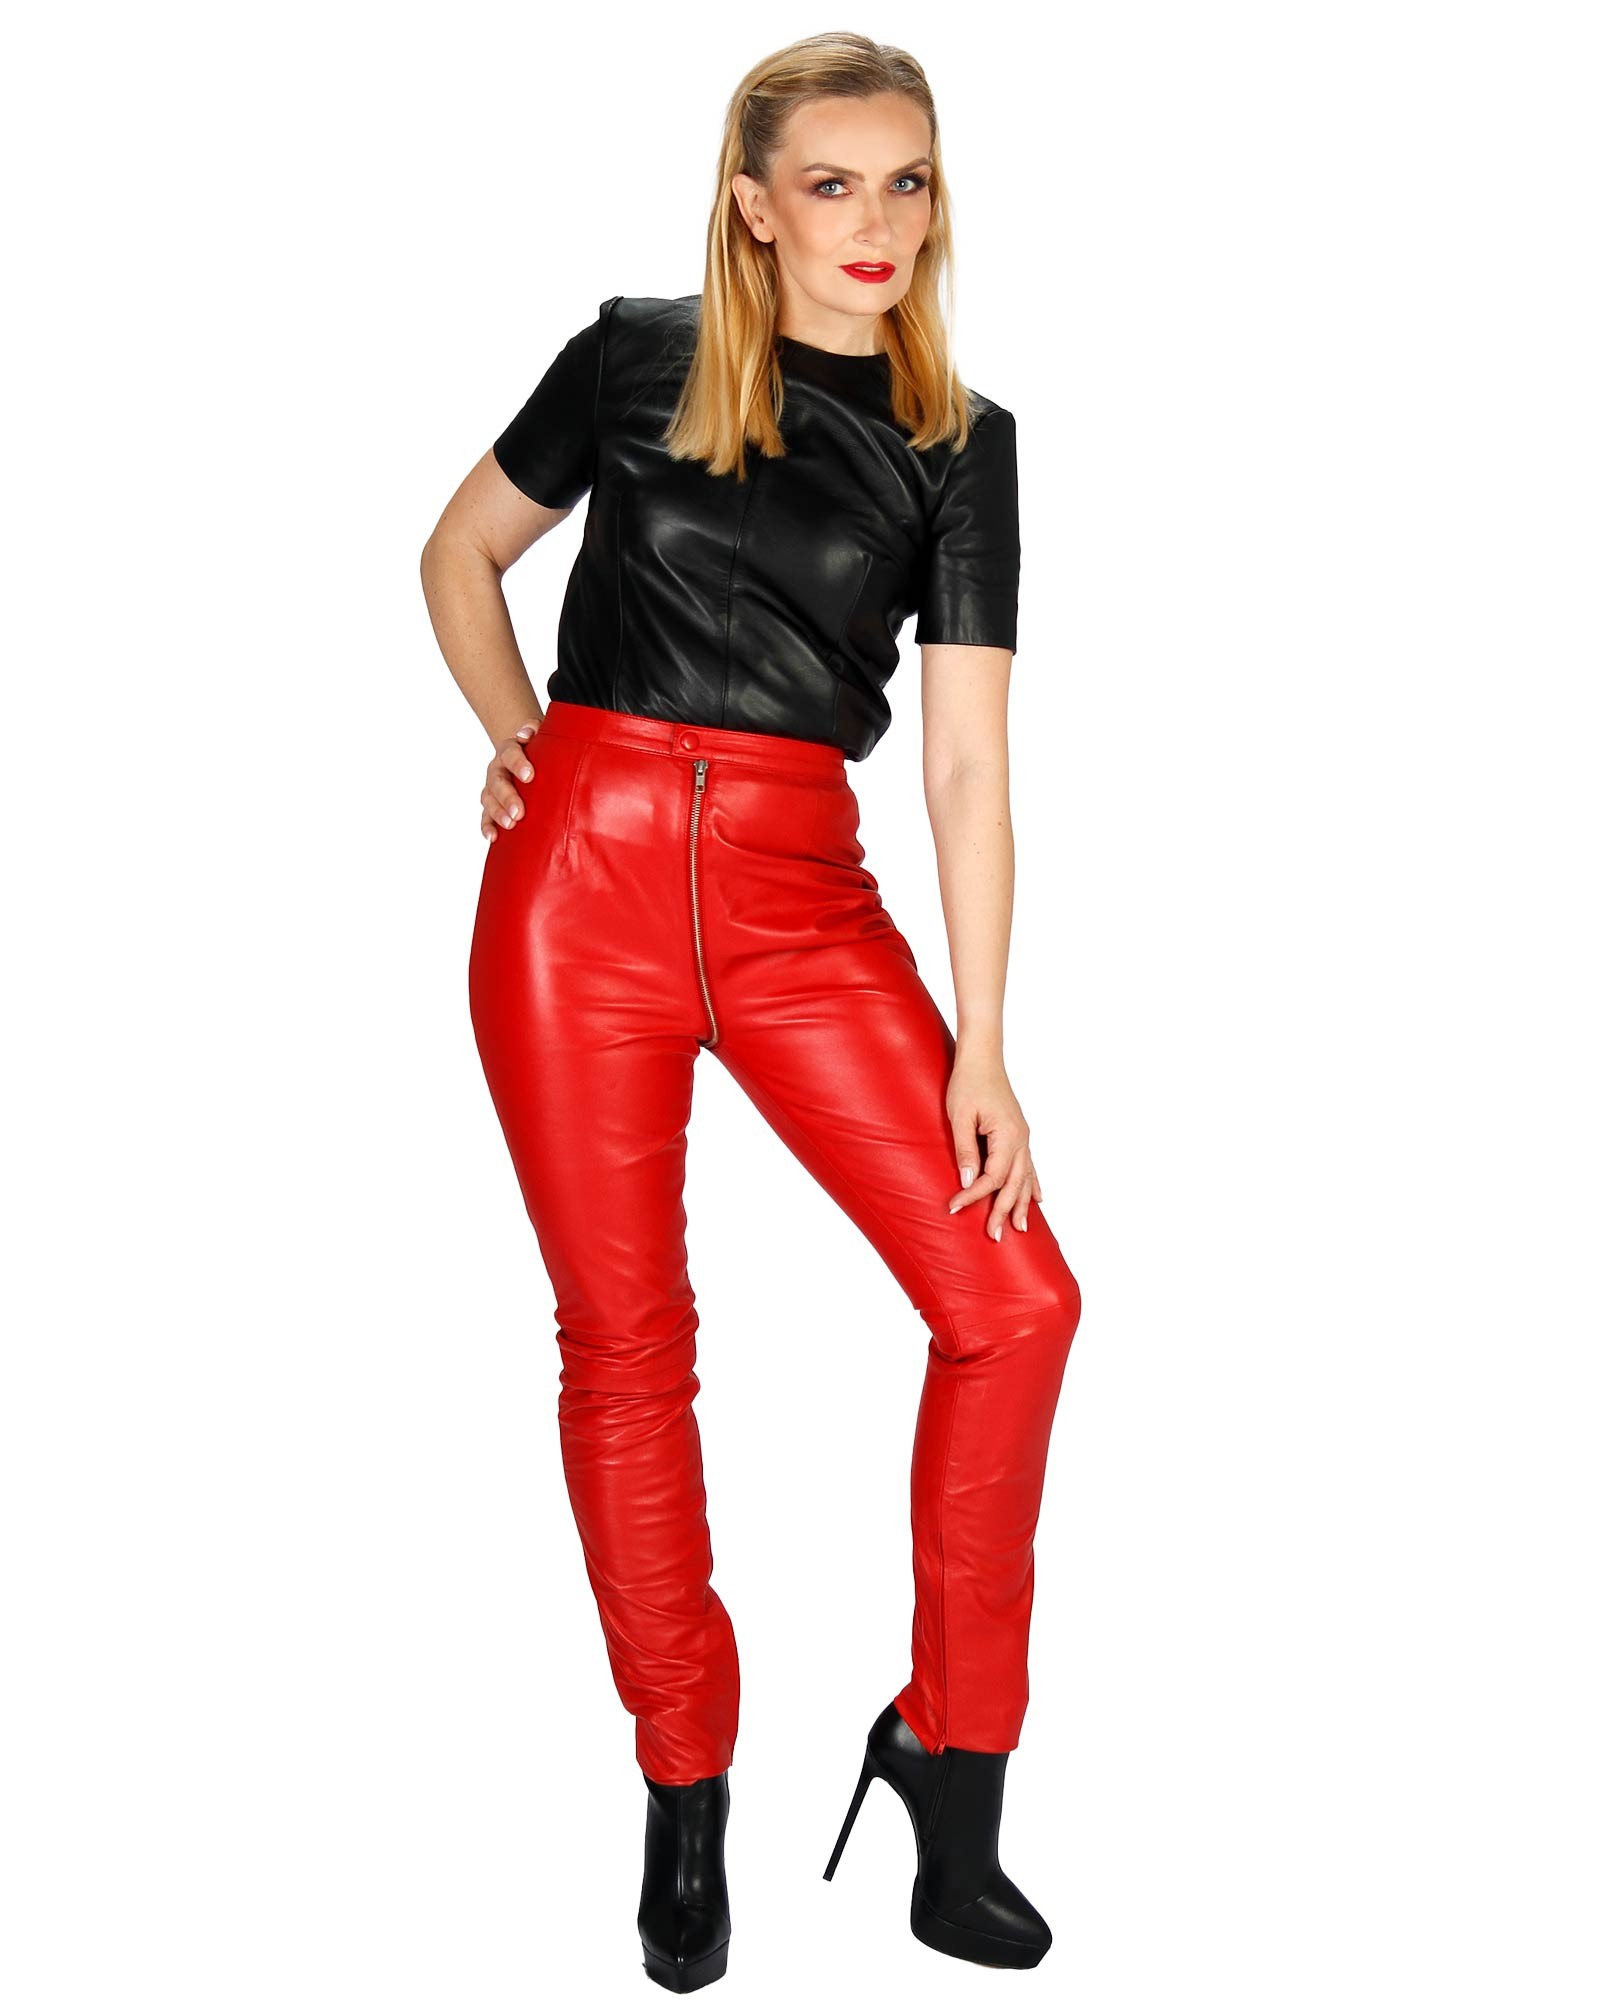 Lederhose Alice red crotch zipper real leather Bitte Größe wählen